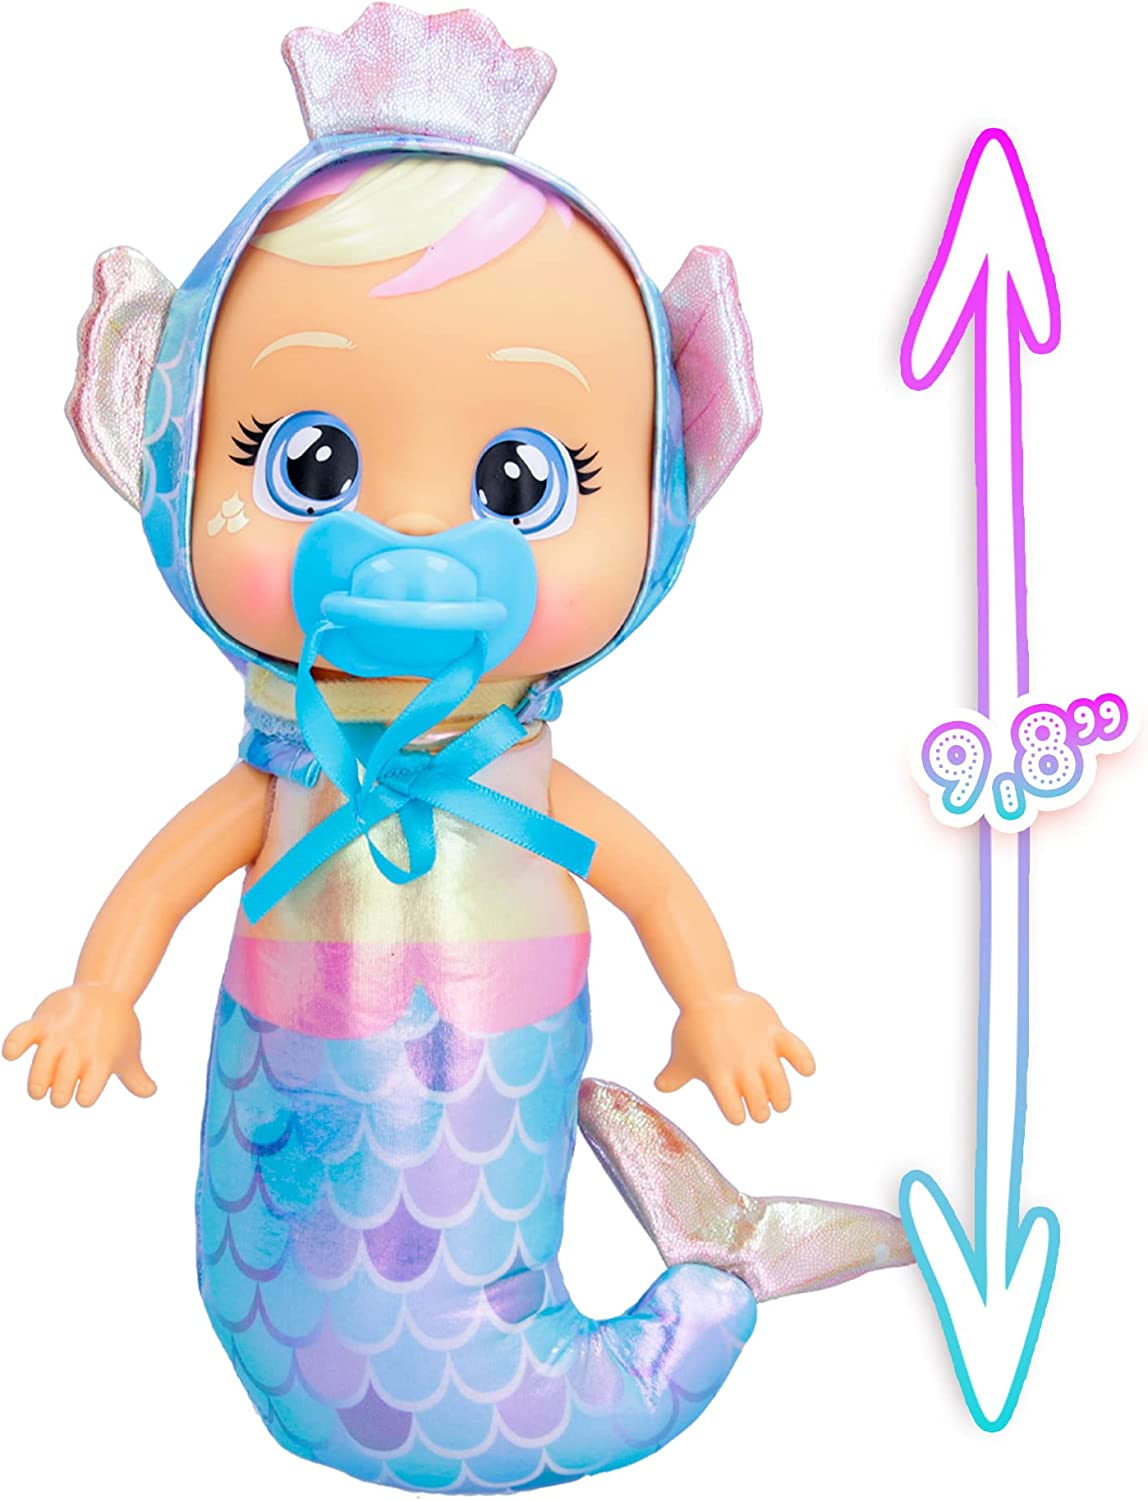 Cry Babies Tiny Cuddles Mermaids Giselle - 9 inch Baby Doll, Cries ReCry Babies Giselle - Cries Real Tears, Metallic Mermaid Themed Pajamas